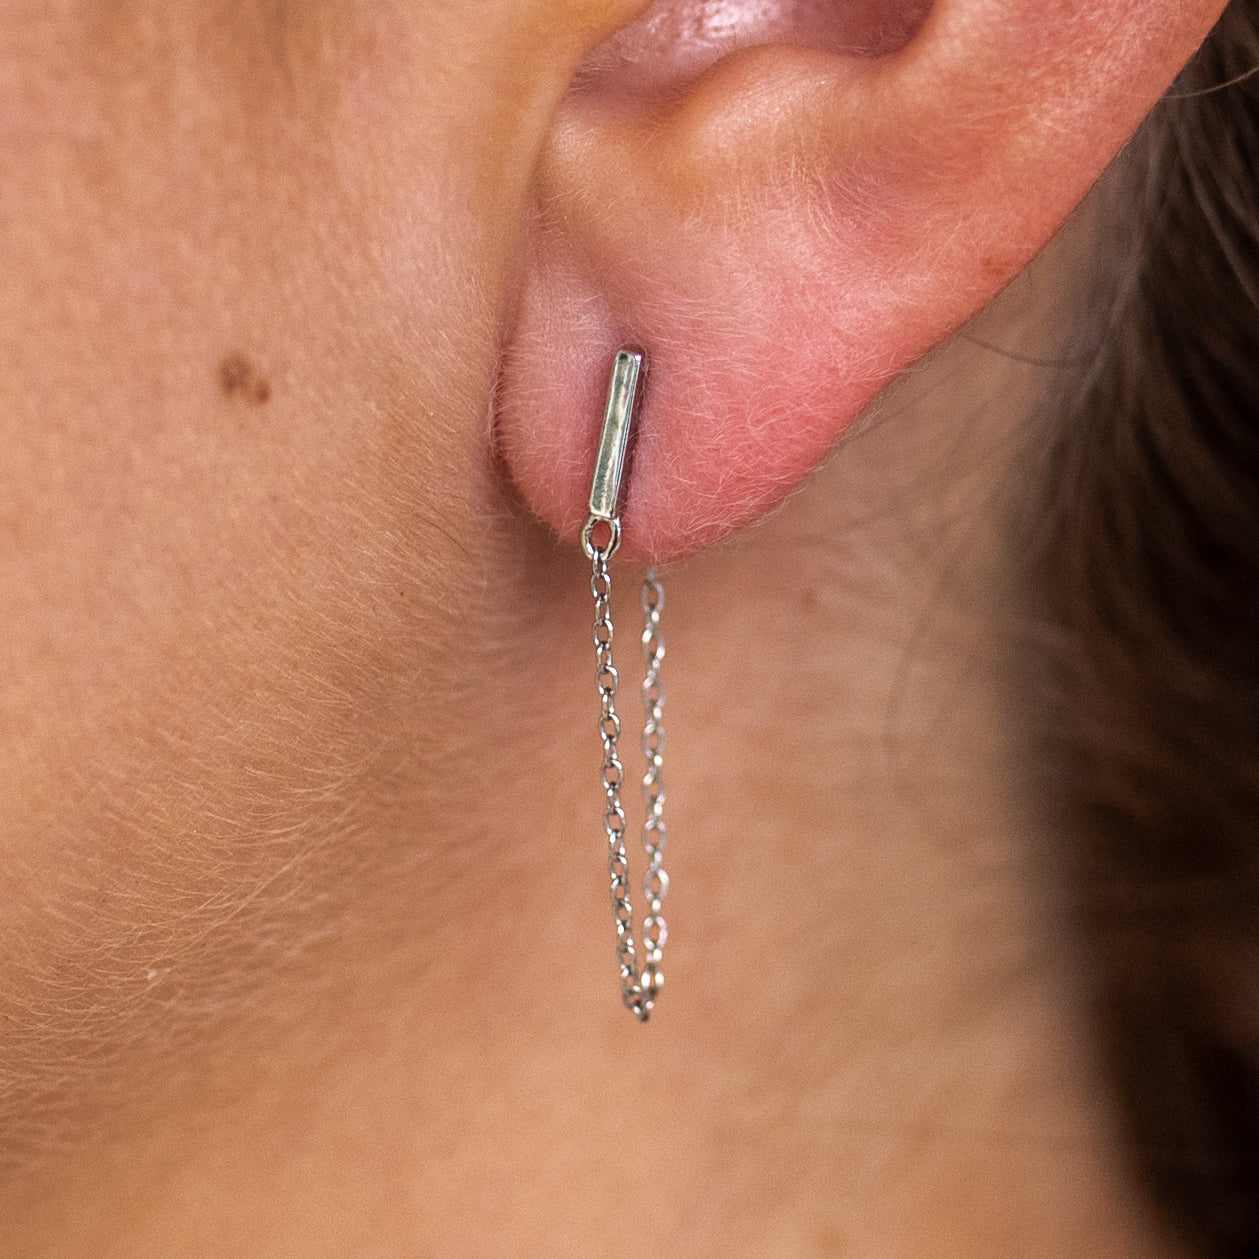 Harmony Chain Stud Earrings, Sliver | ALCO Jewelry